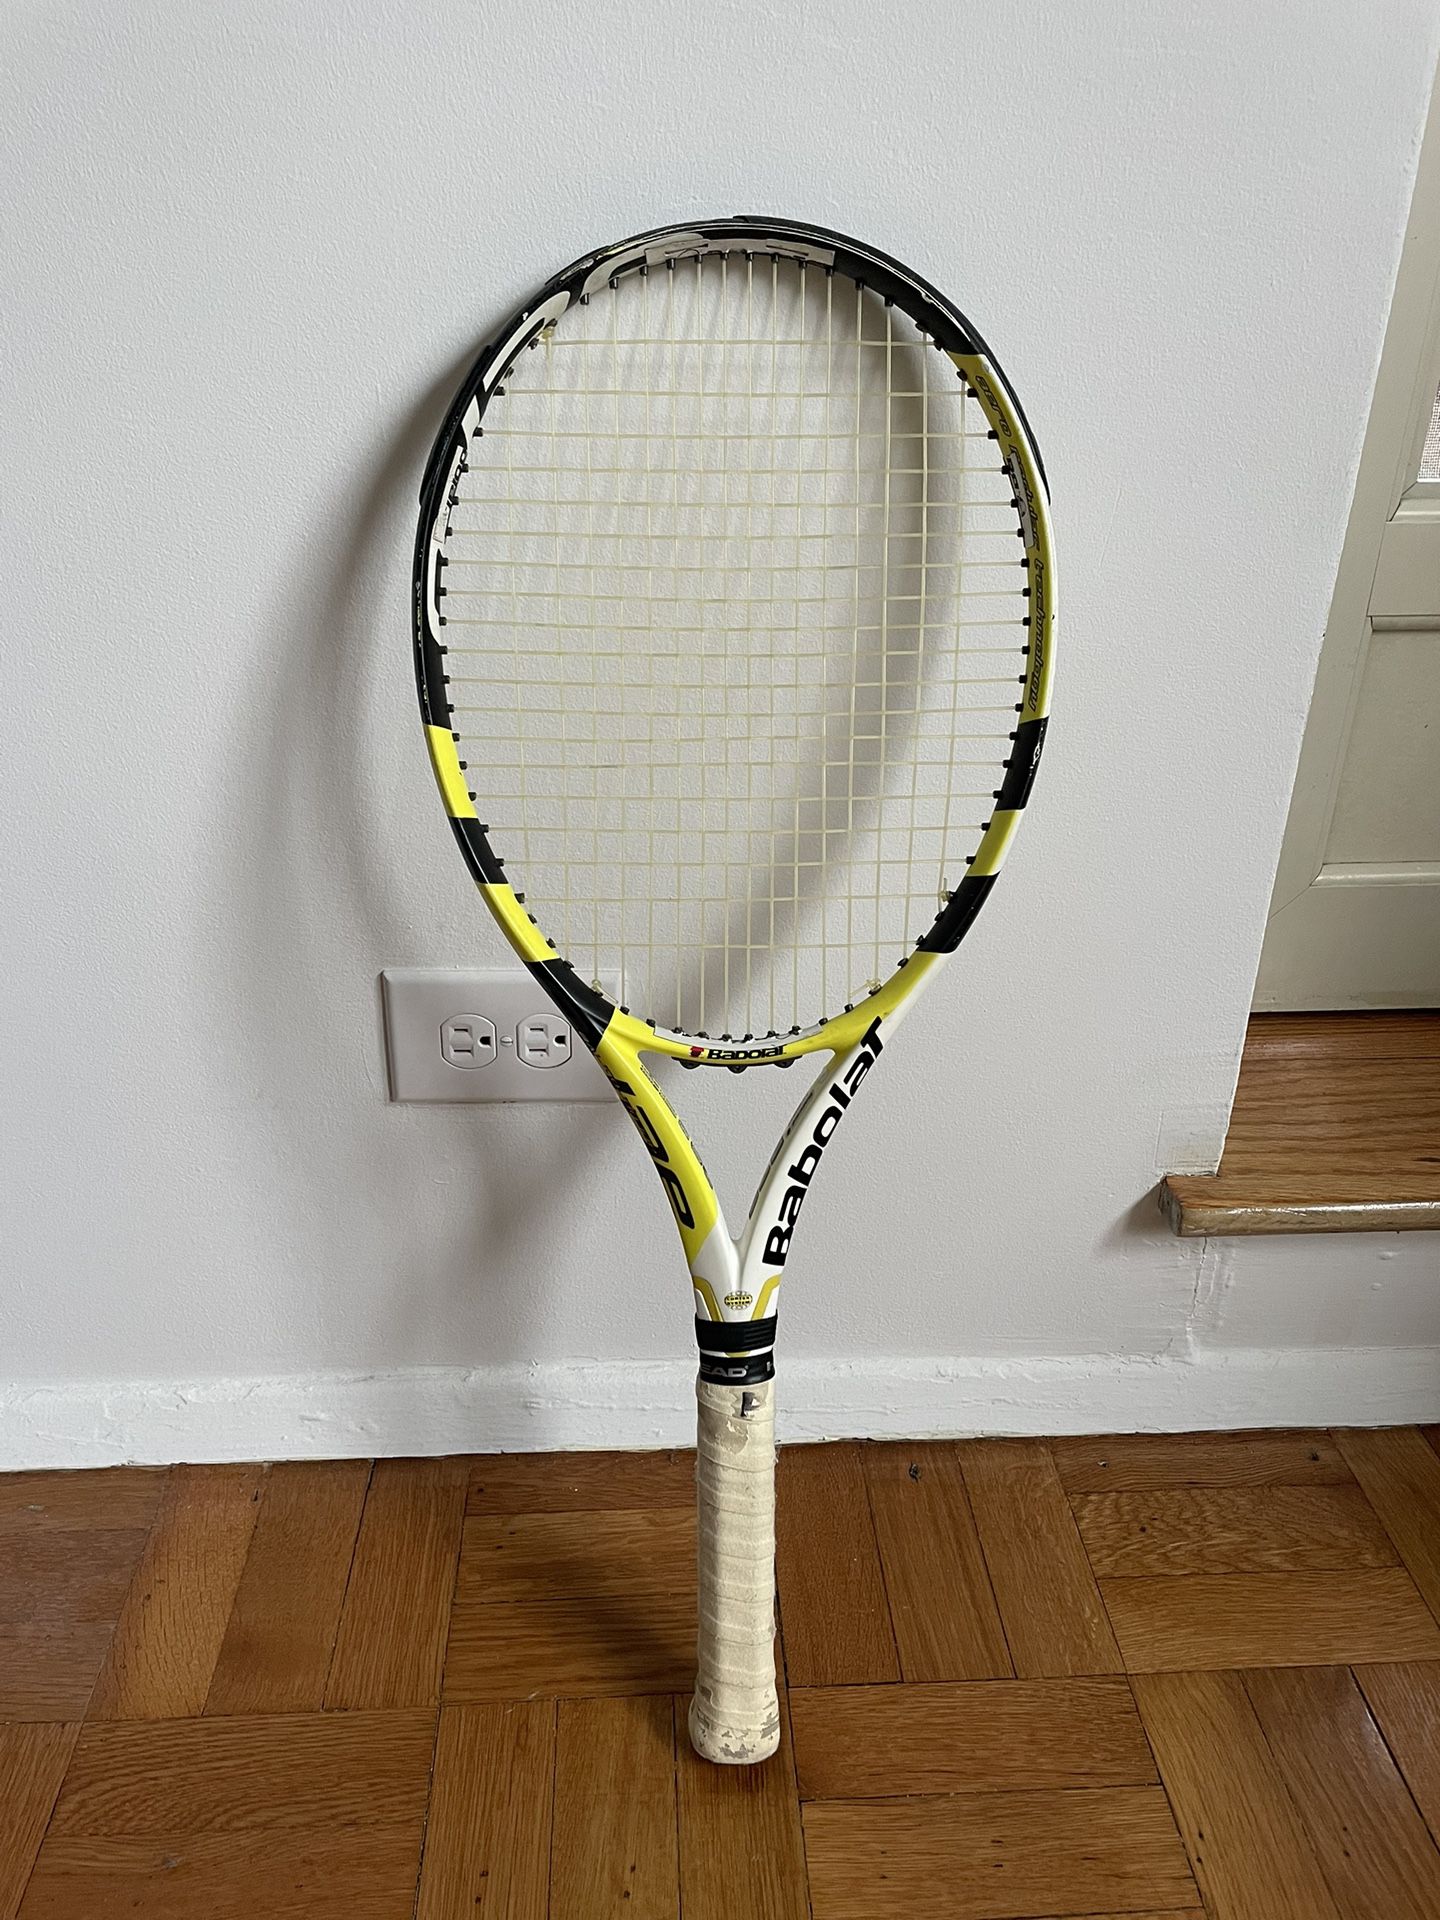 Babolat Aeropro Drive Tennis Racket